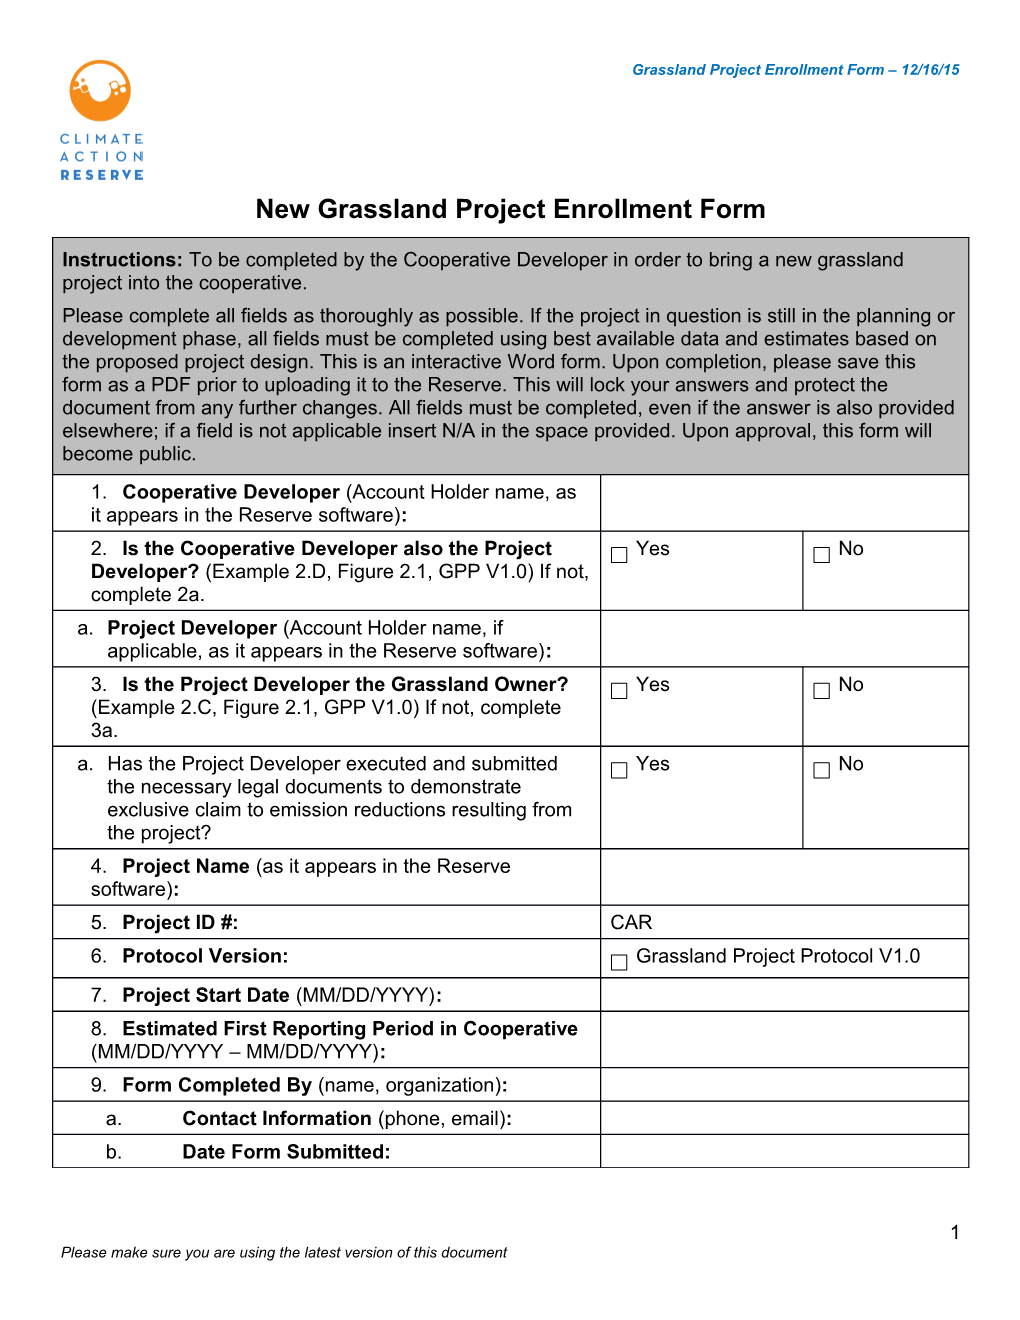 New Grassland Project Enrollment Form